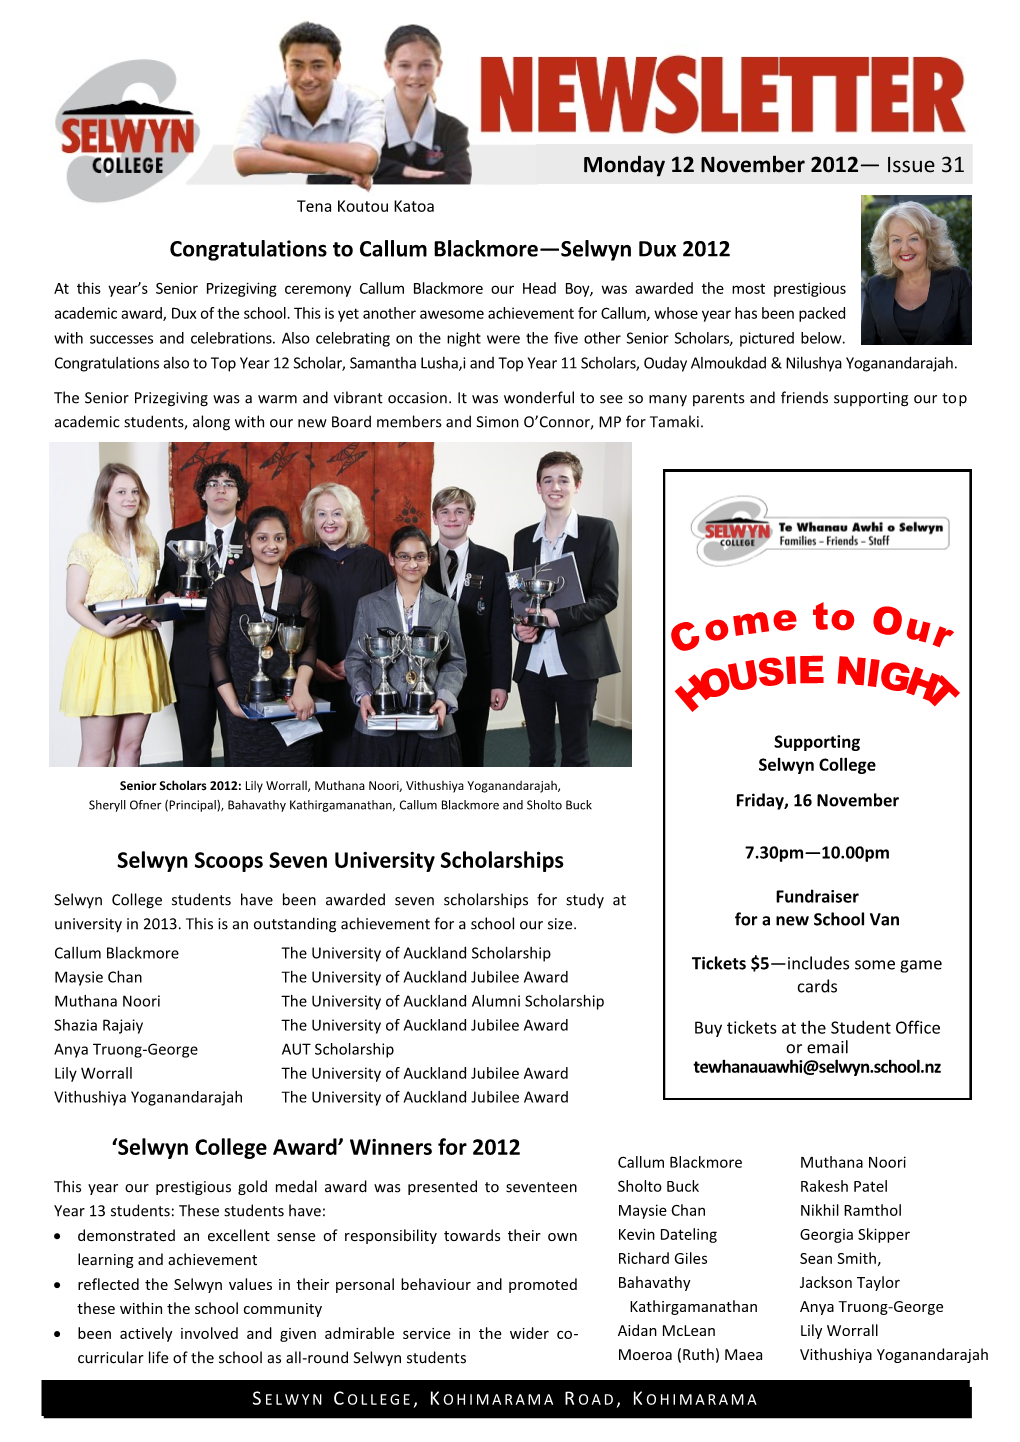 Congratulations to Callum Blackmore—Selwyn Dux 2012